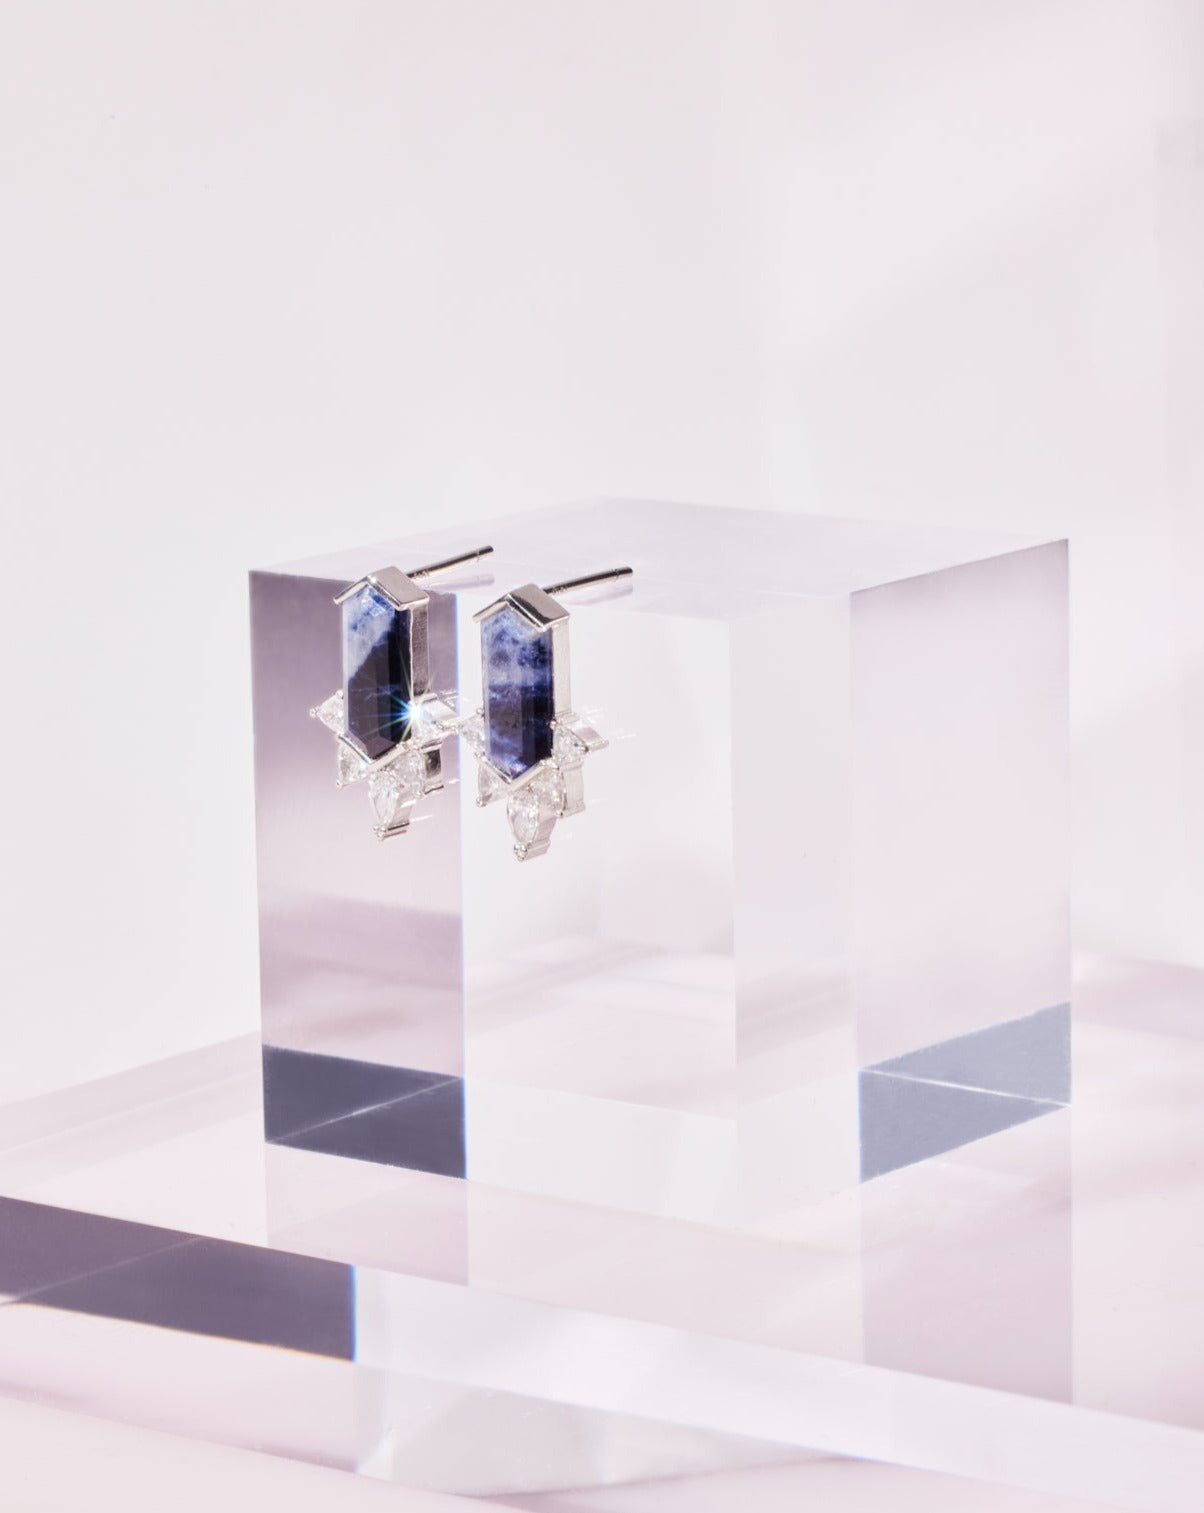 A stunning hexagonal cut Sapphire Diamond Earring placed on a white shinny surface.